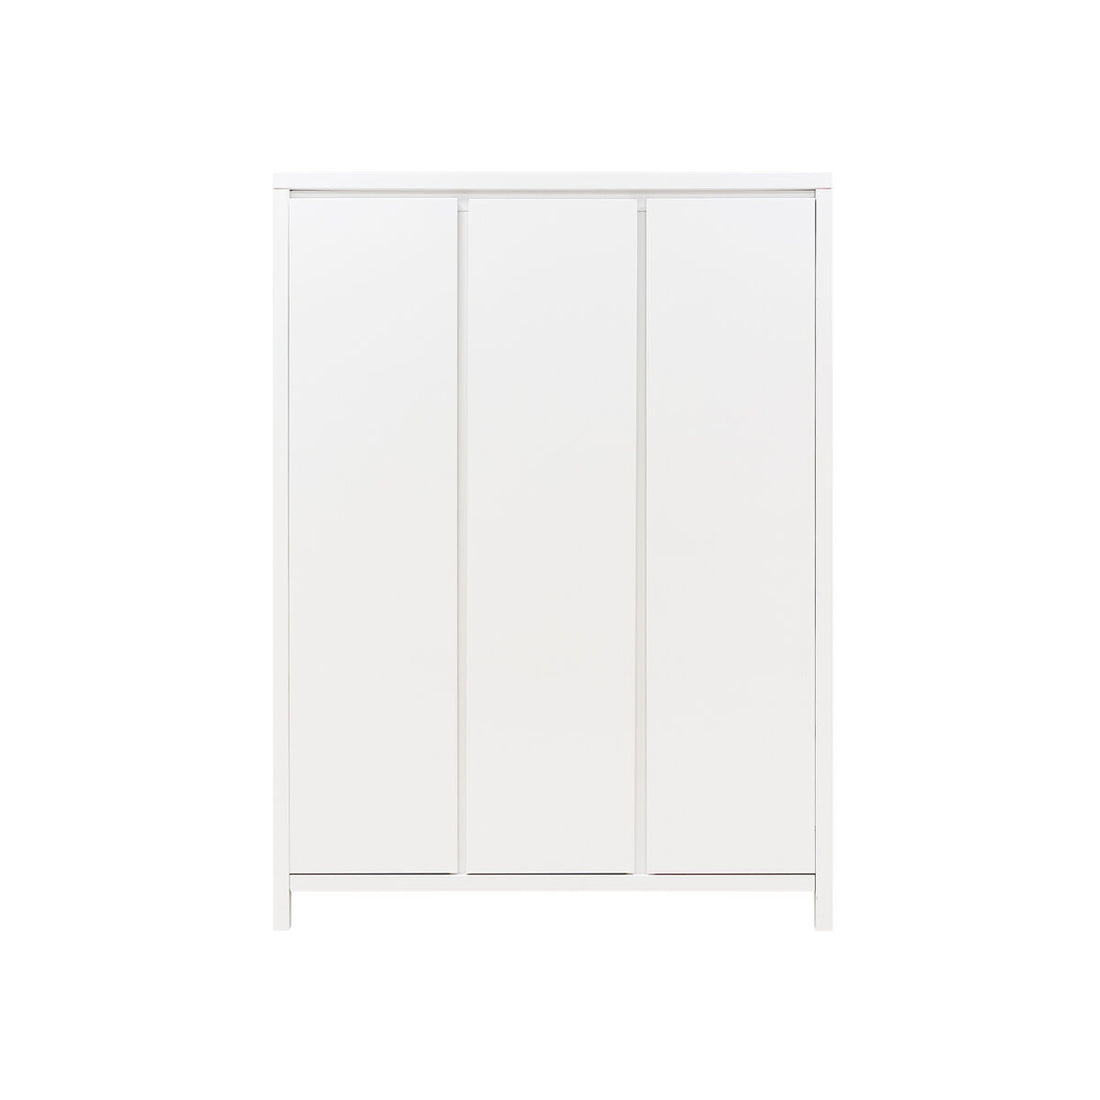 bopita-3-door-wardrobe-corsica-white-bopt-562711- (1)